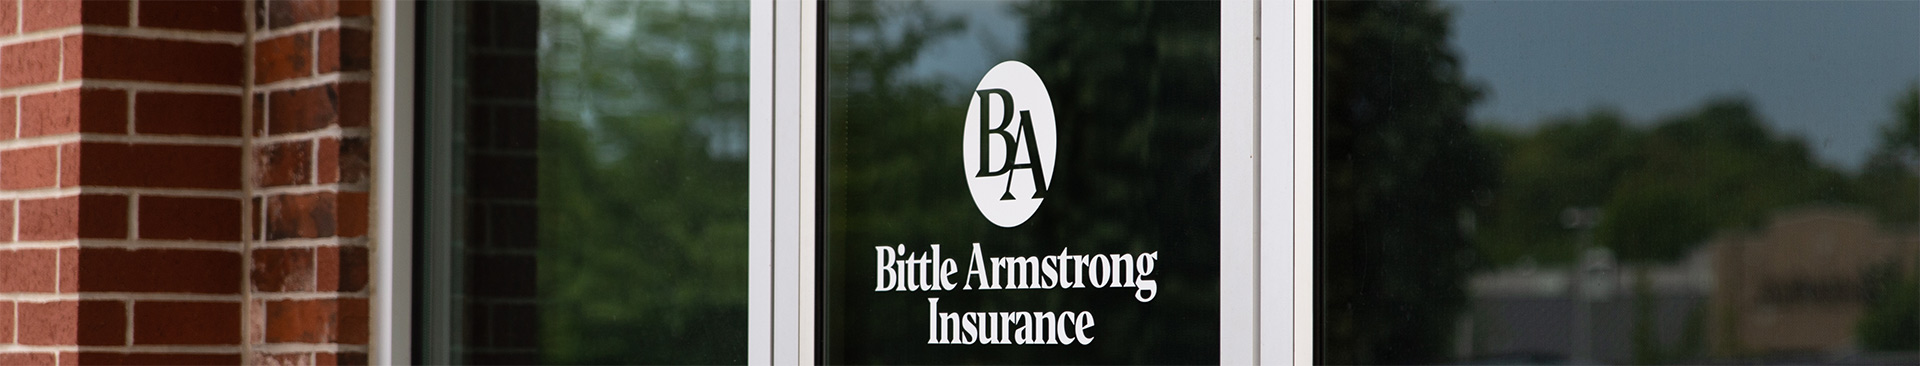 Bittle Armstrong Insurance front door logo